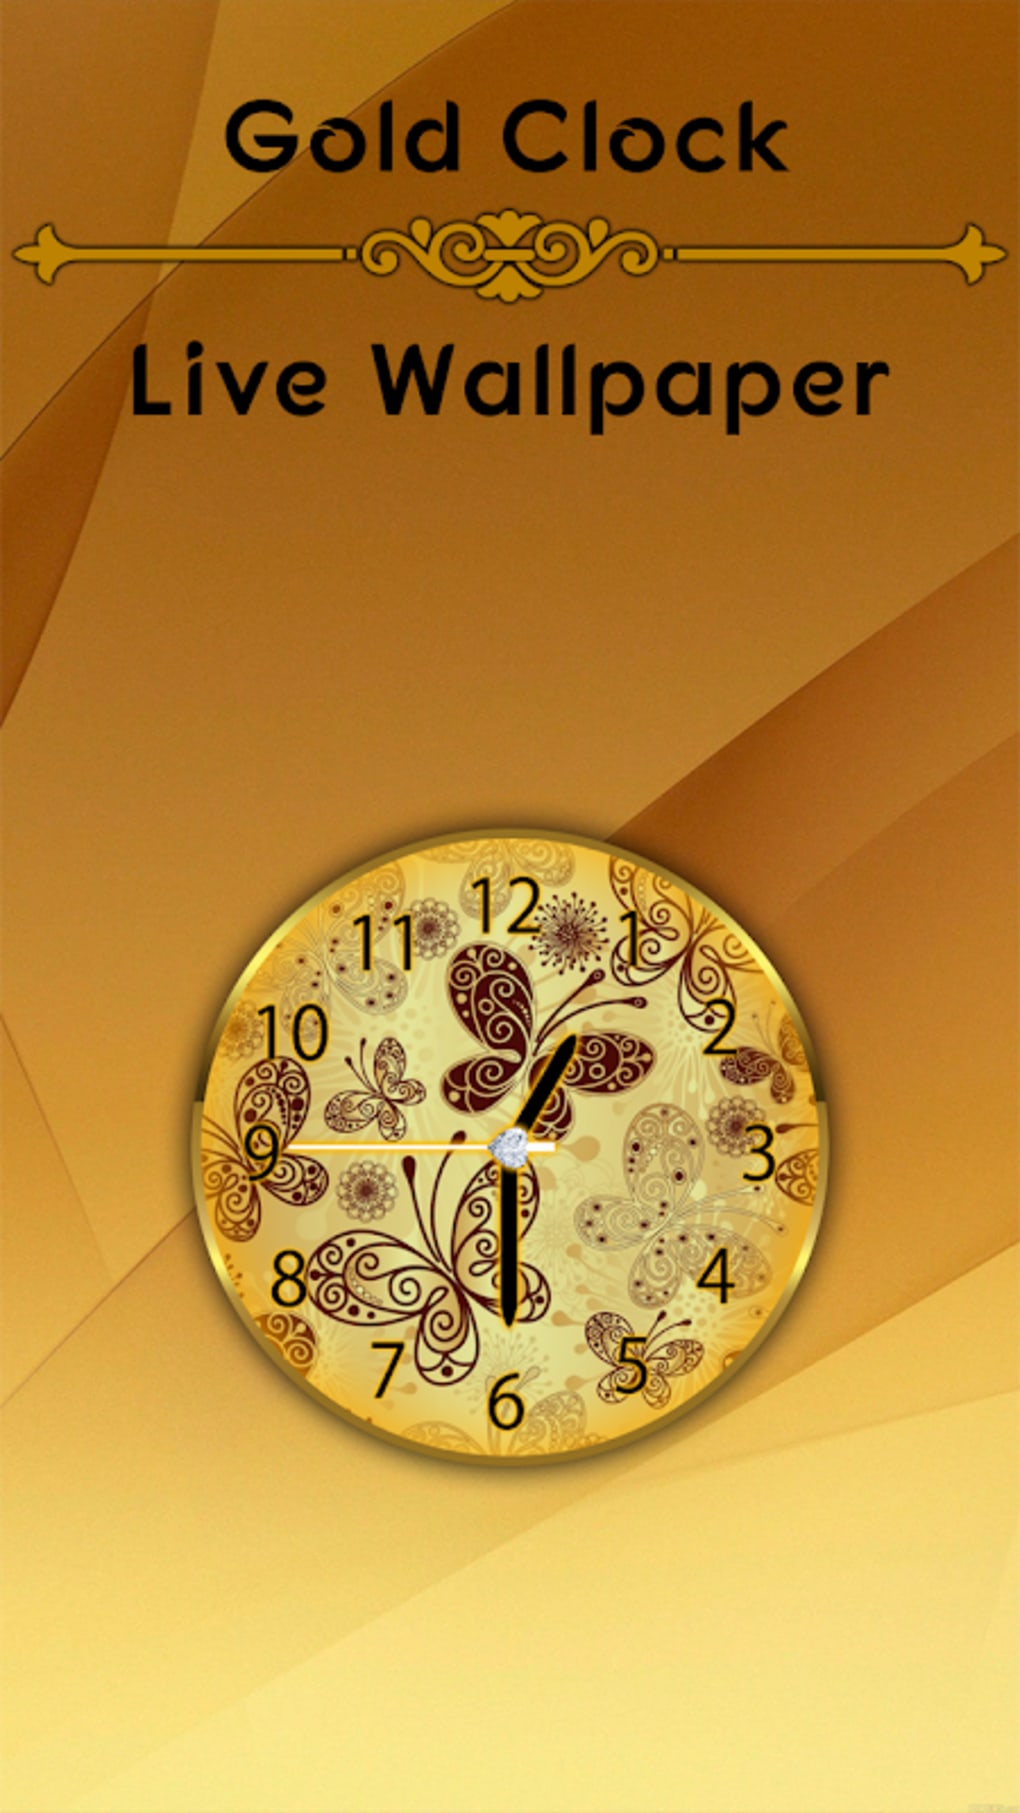 Download Free Android Wallpaper Gold Clock - 4129 - MobileSMSPK.net